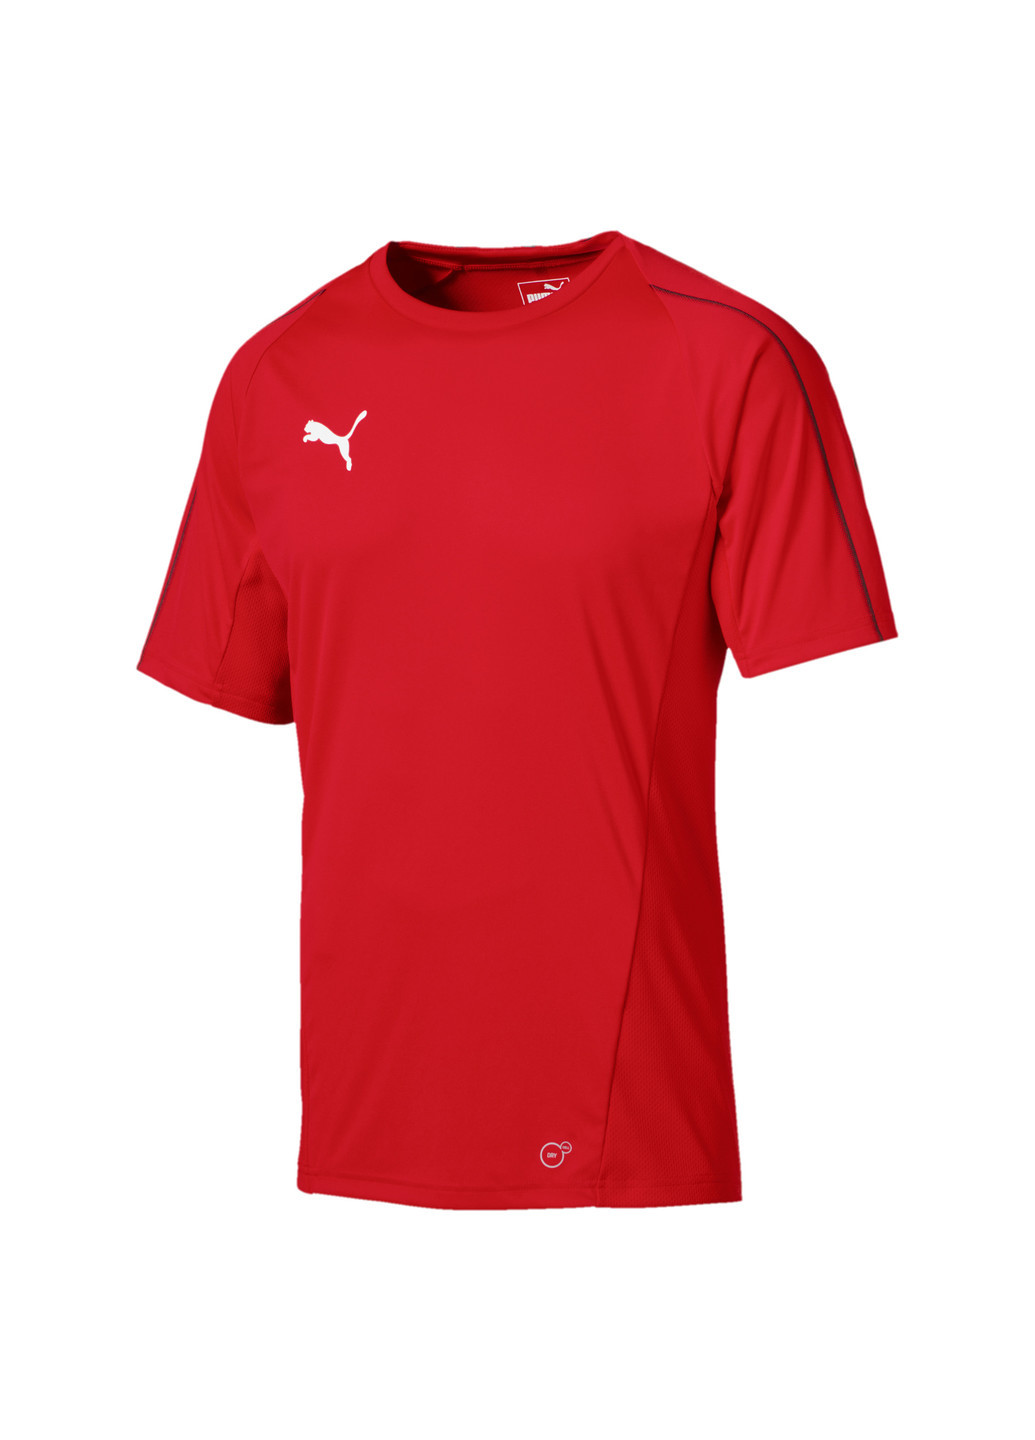 Красная футболка Puma